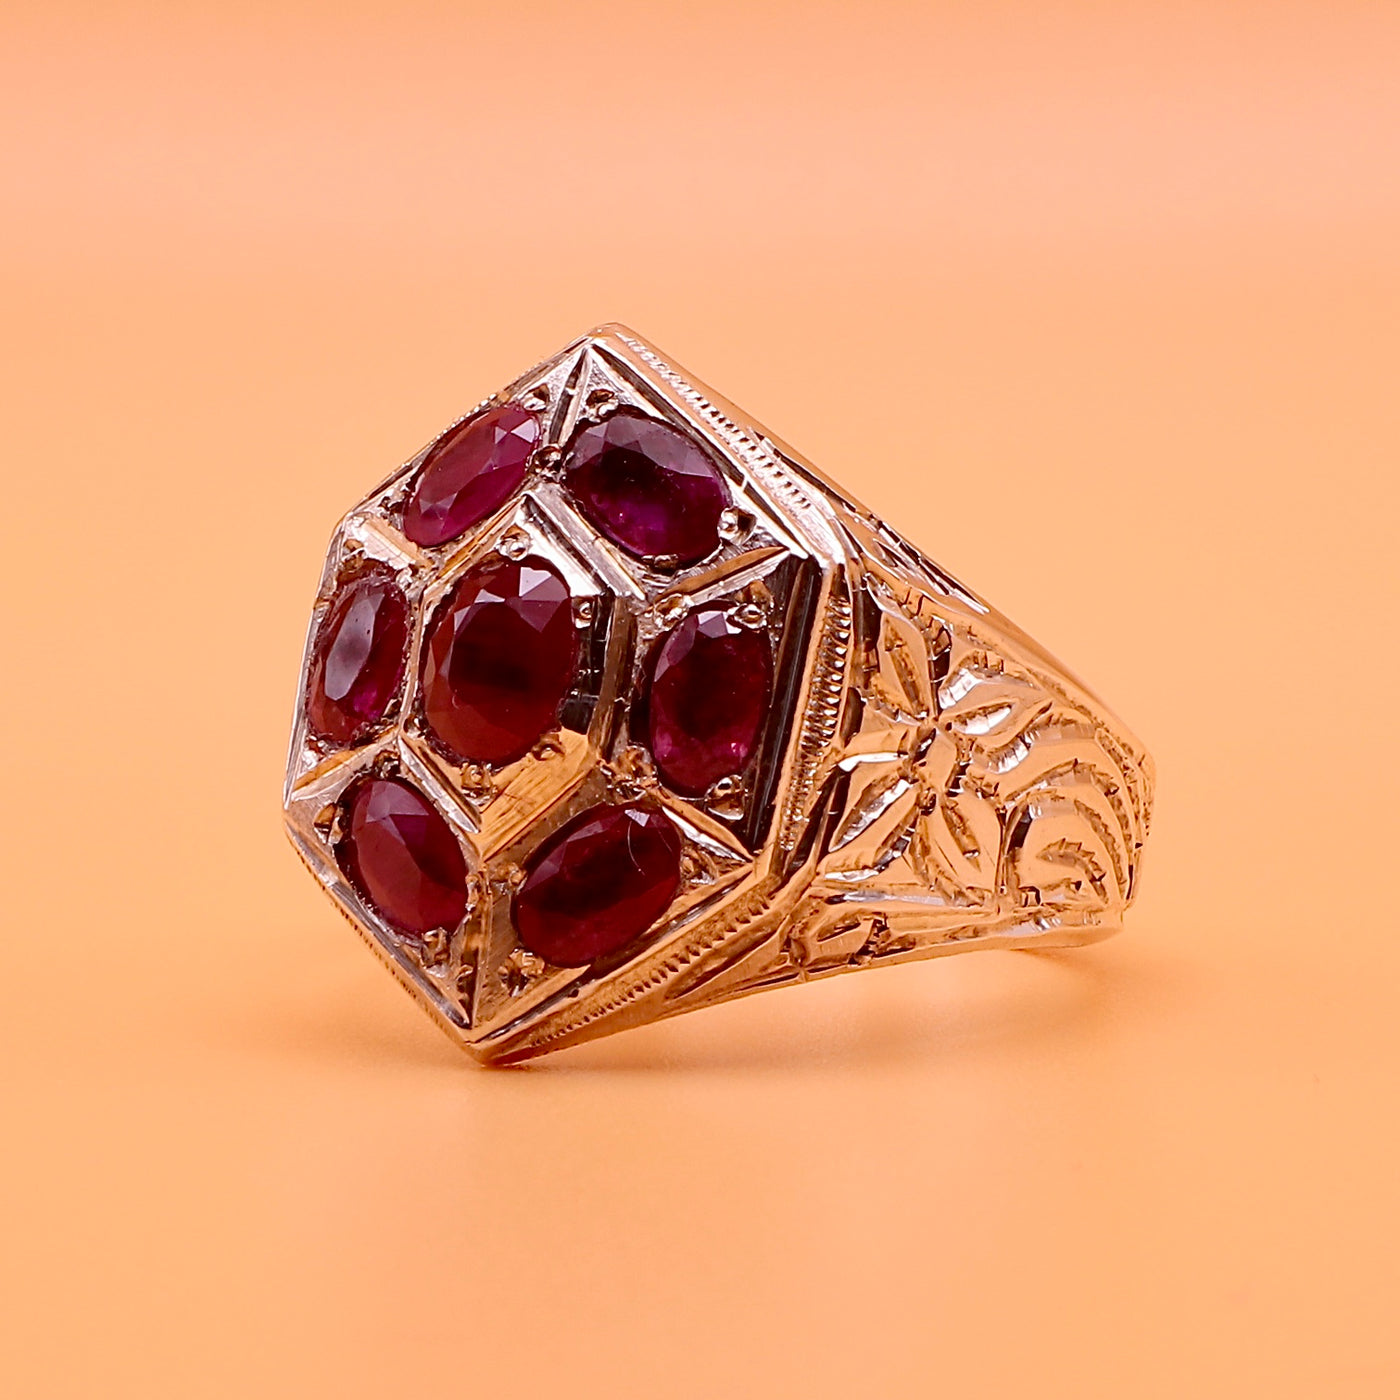 Handmade Persian Yaqoot Ring | Handmade Ring With 7 Natural Ruby Stones | US Size 12 - Al Ali Gems